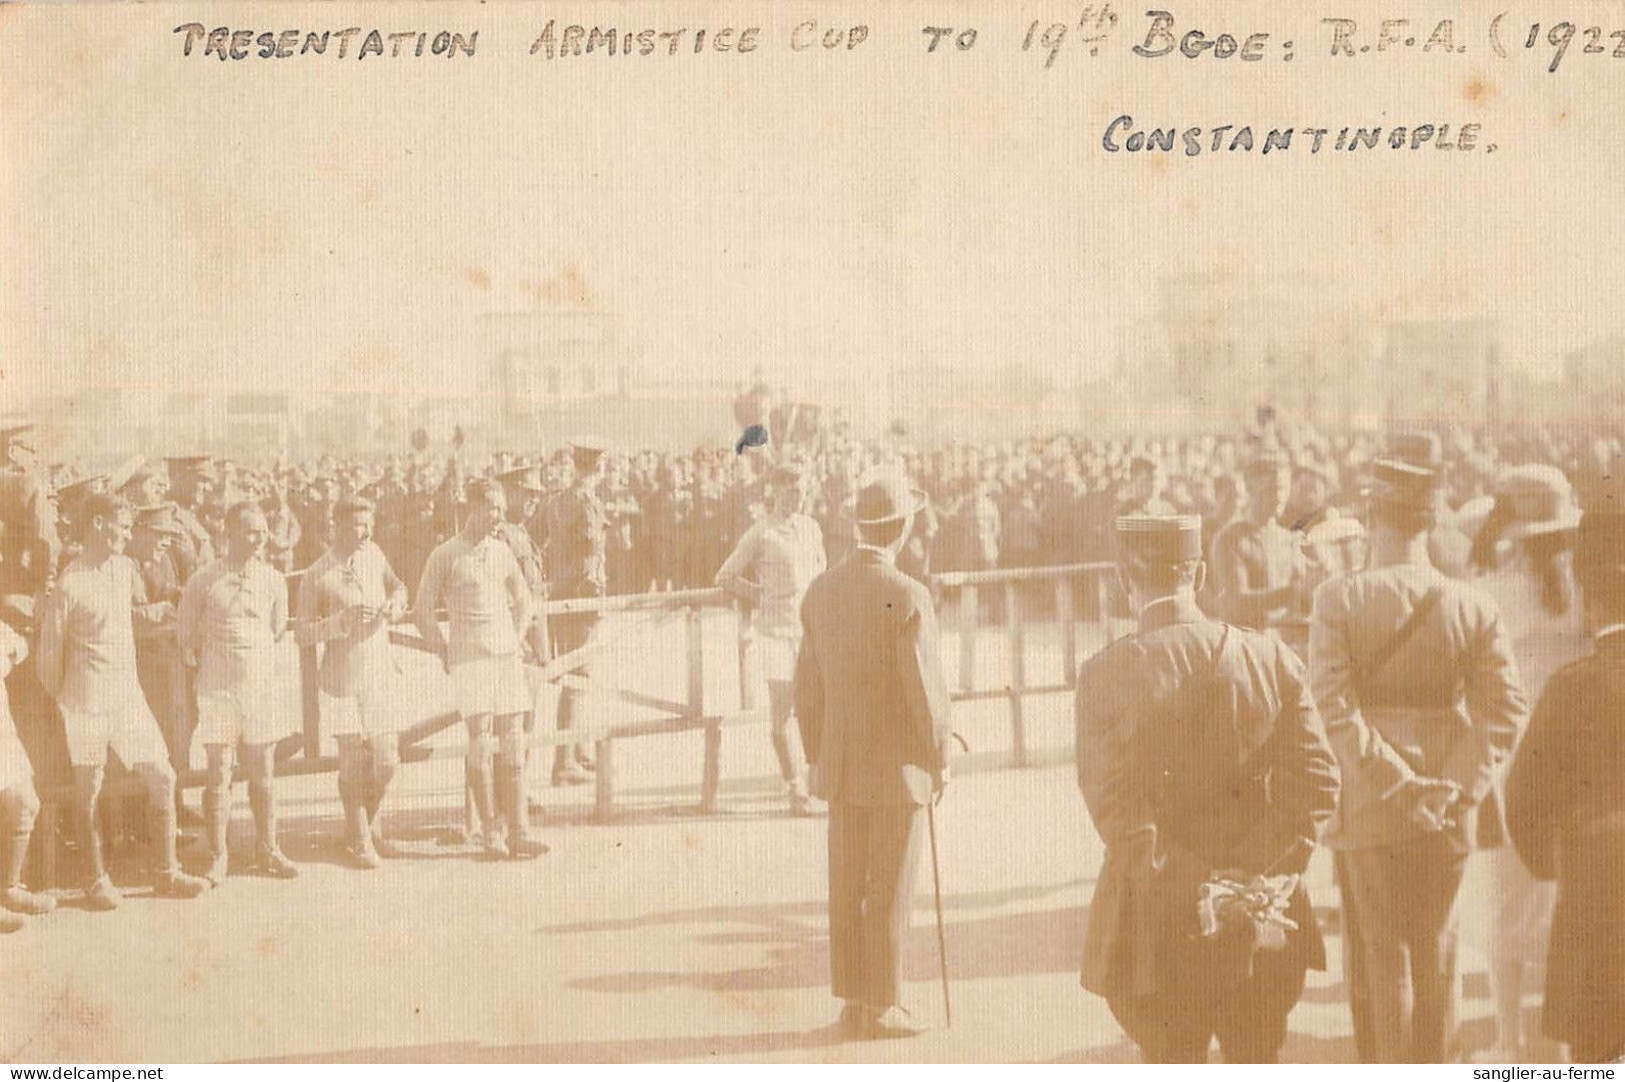 CPA / TURQUIE / CARTE PHOTO / CONSTANTINOPLE / PRESENTATION ARMISTICE CUP TO 19th BGDE: RFA 1922 / CONSTANTINOPLE - Turchia